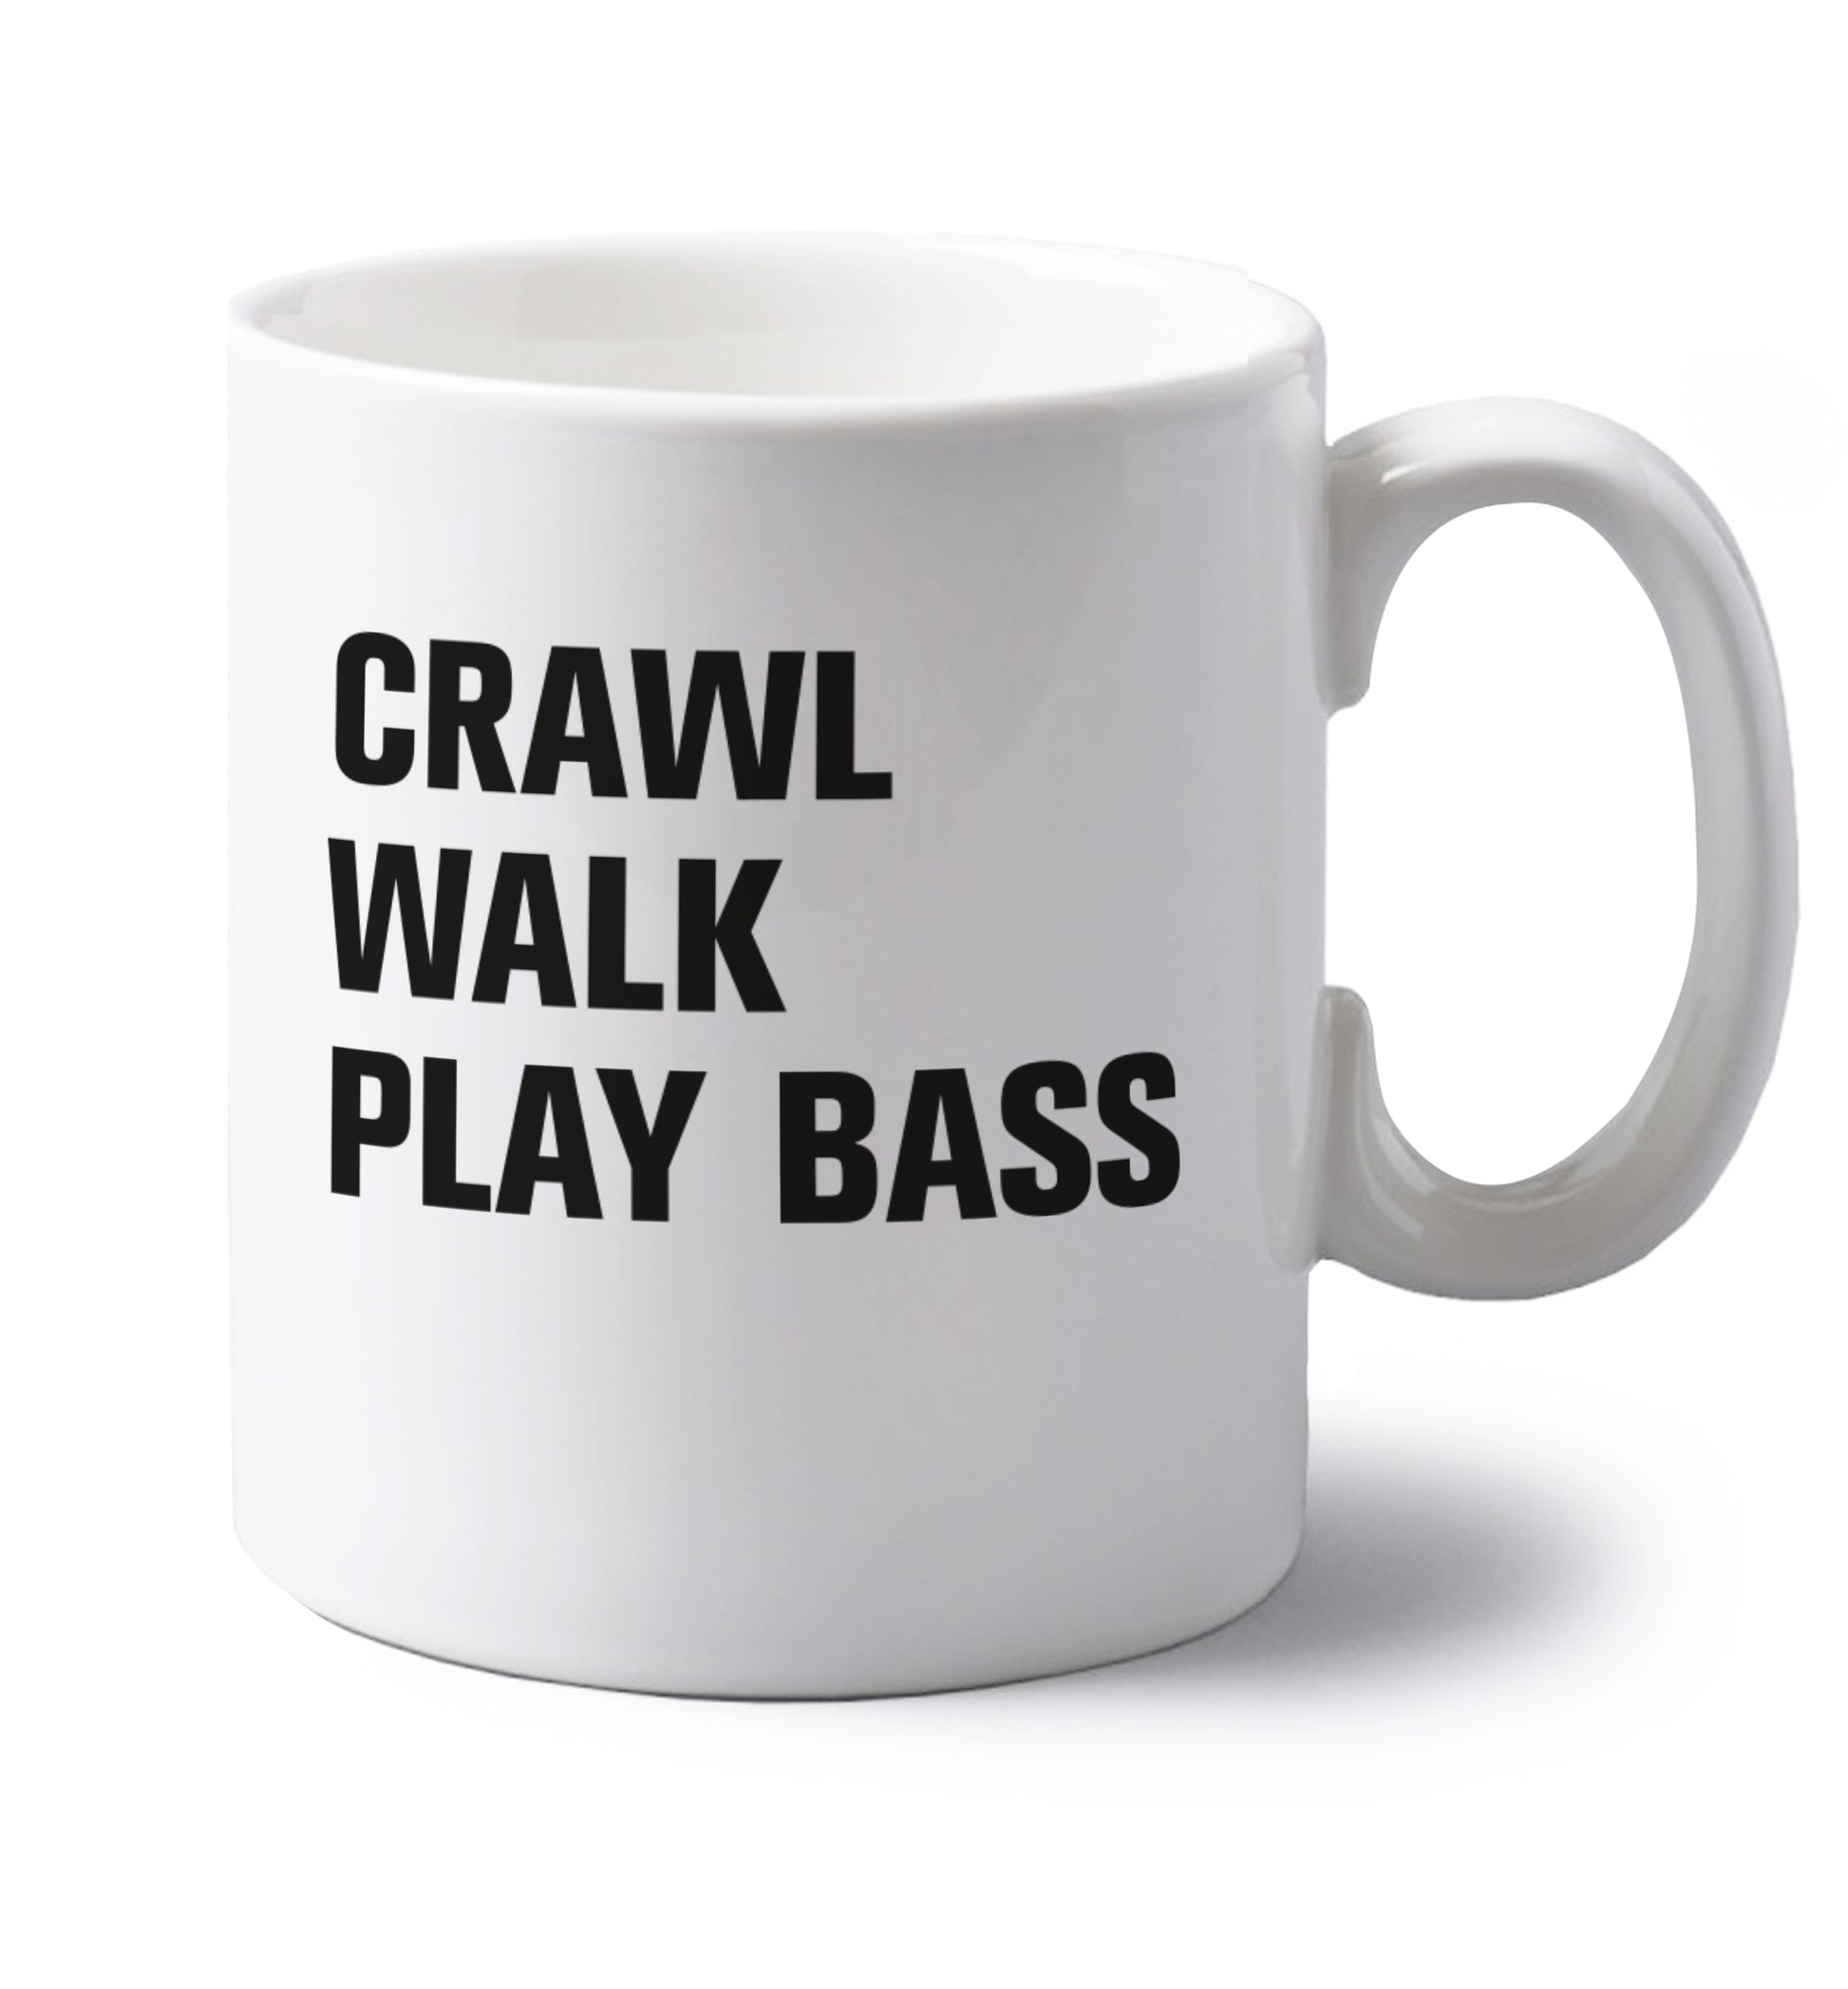 Crawl Walk Play Bass left handed white ceramic mug 